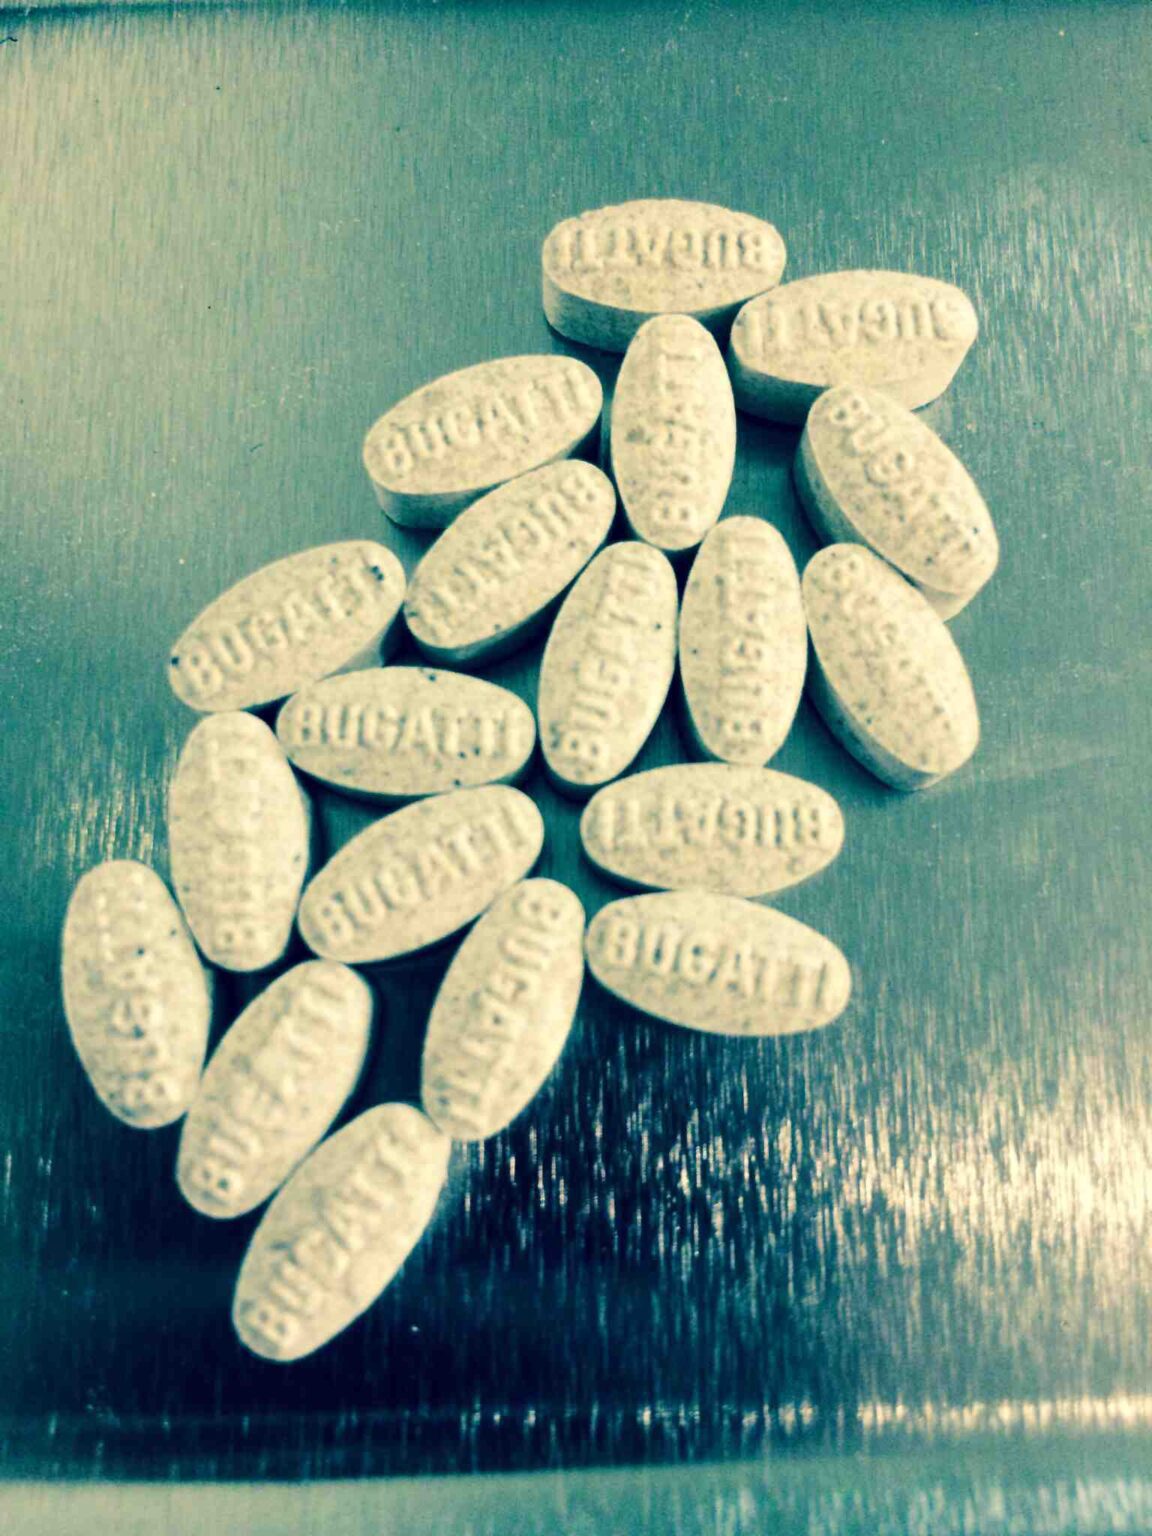 Gray Bugatti MDMA pills